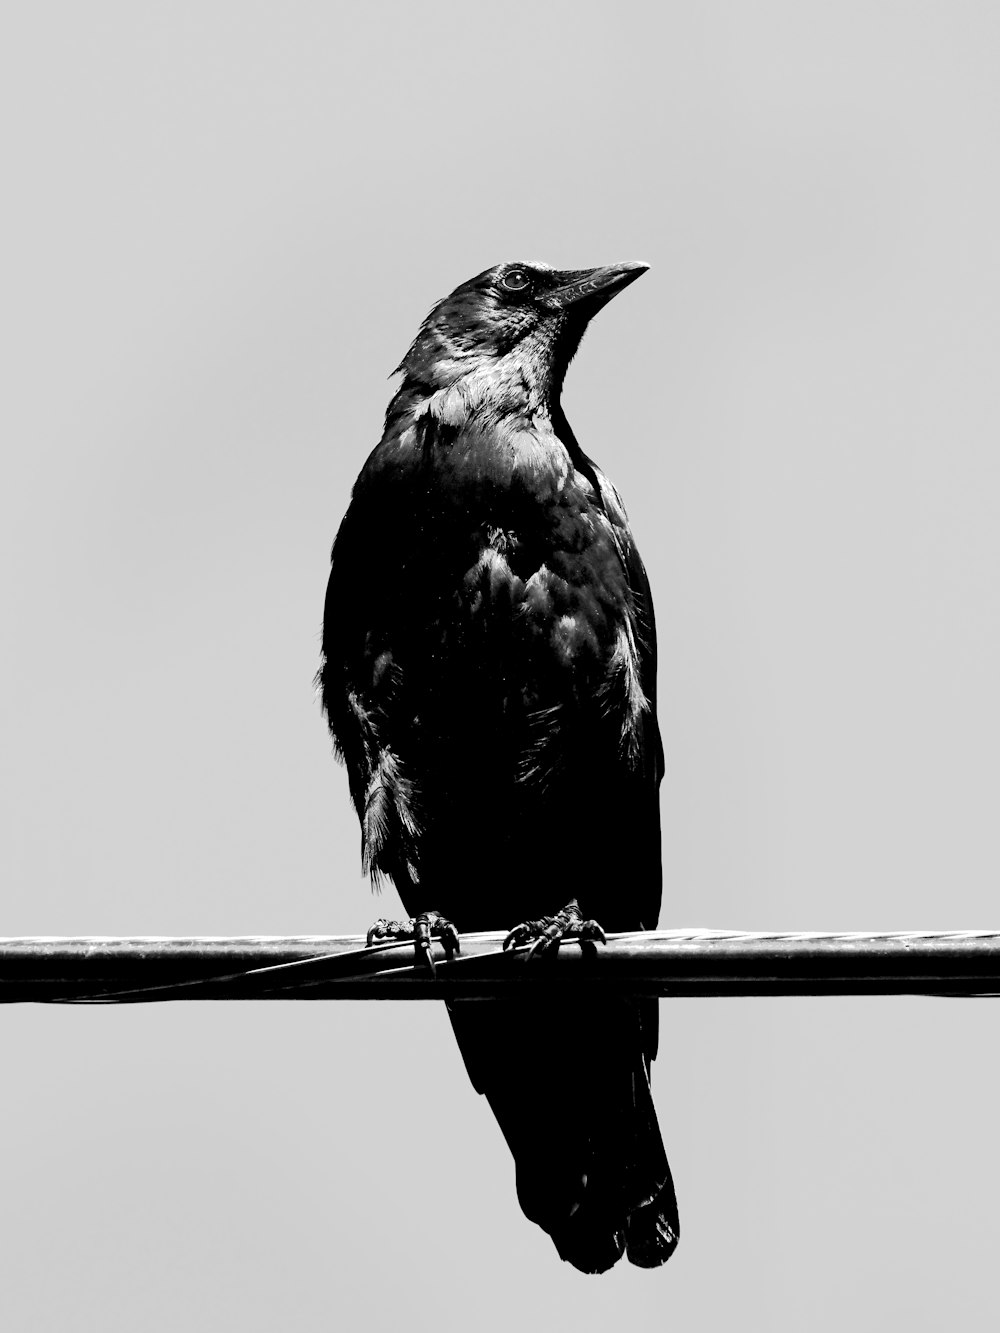 a black bird on a branch